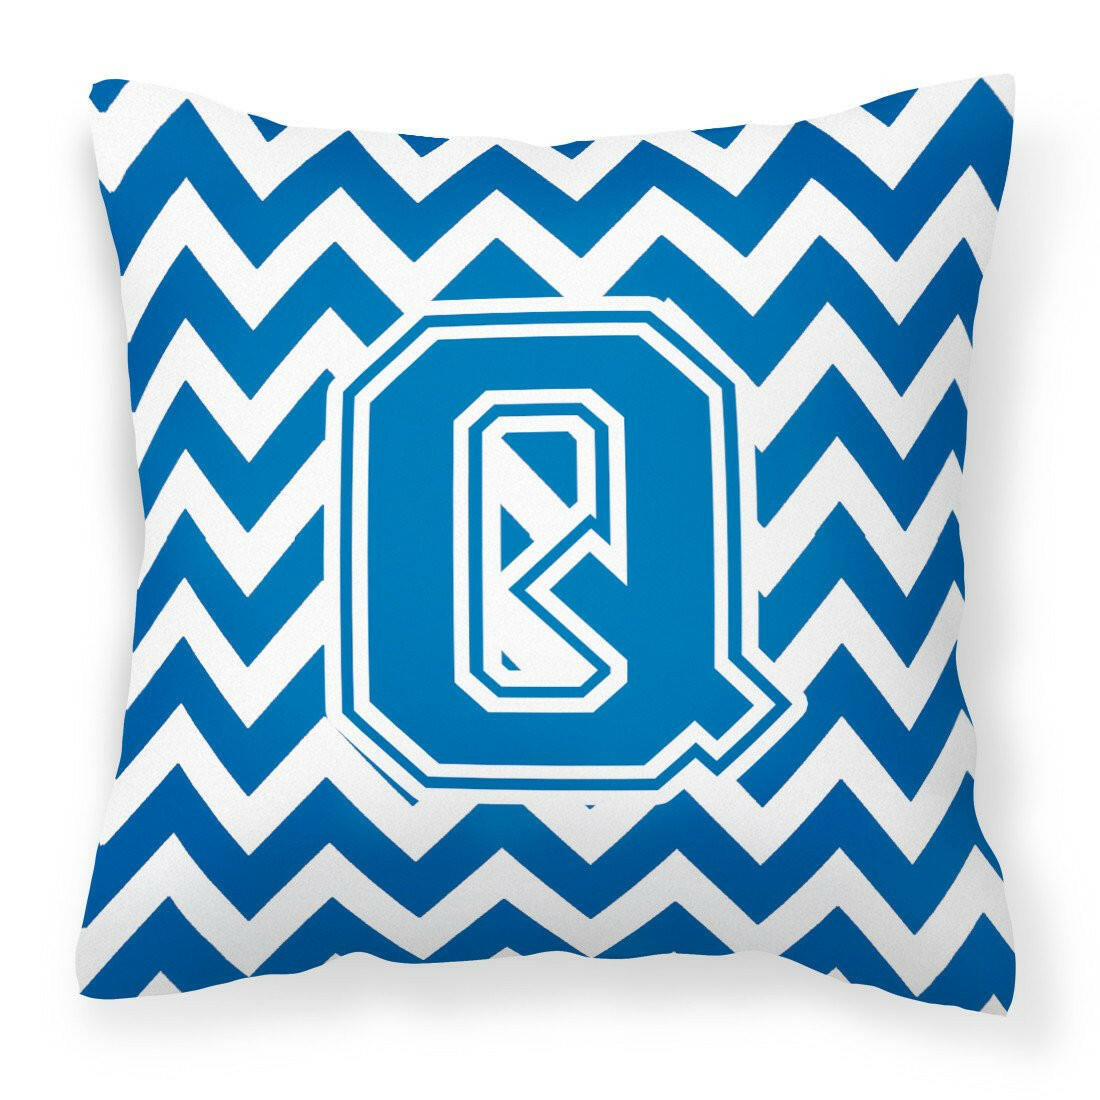 Letter Q Chevron Blue and White Fabric Decorative Pillow CJ1056-QPW1414 by Caroline's Treasures